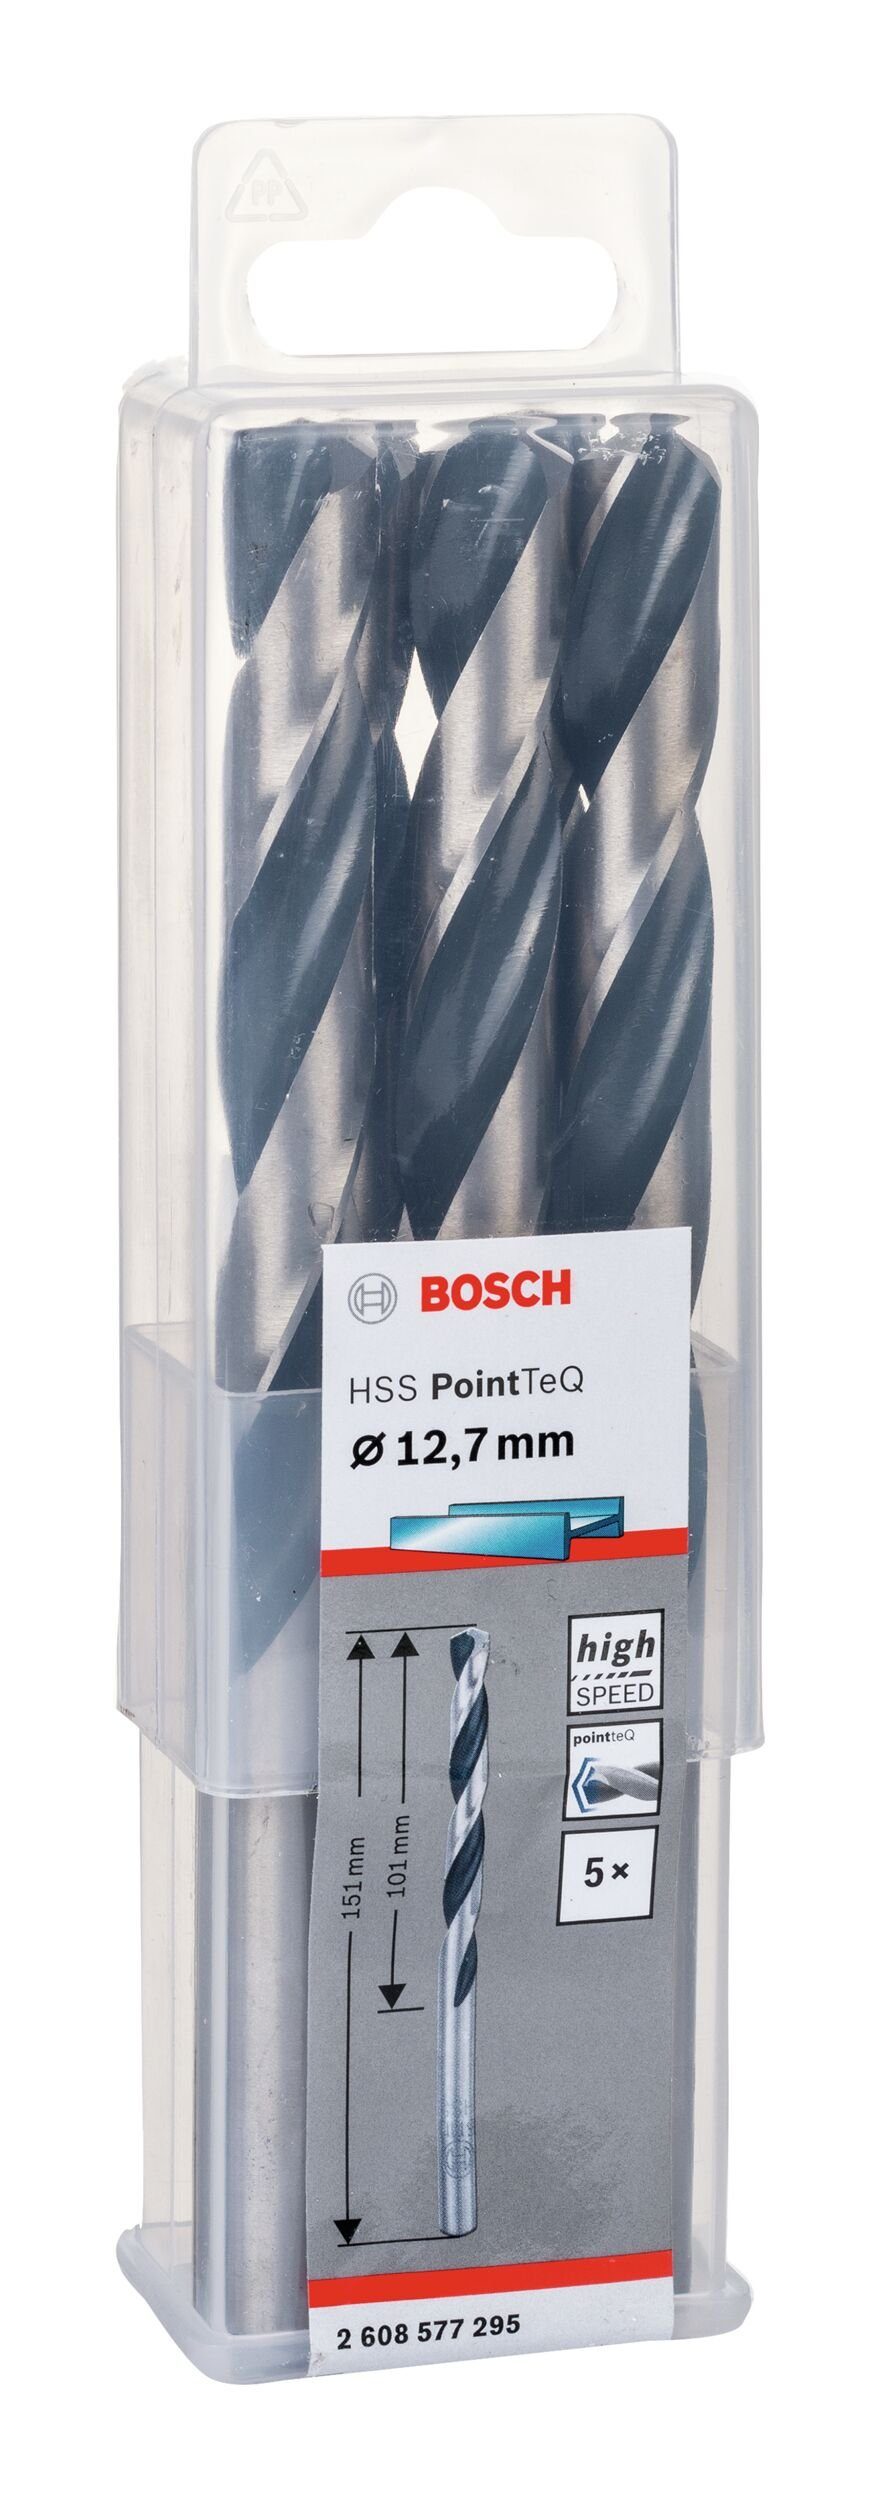 Stück), Metallspiralbohrer HSS 5er-Pack (5 PointTeQ BOSCH - (DIN 12,7 mm 338) Metallbohrer, -